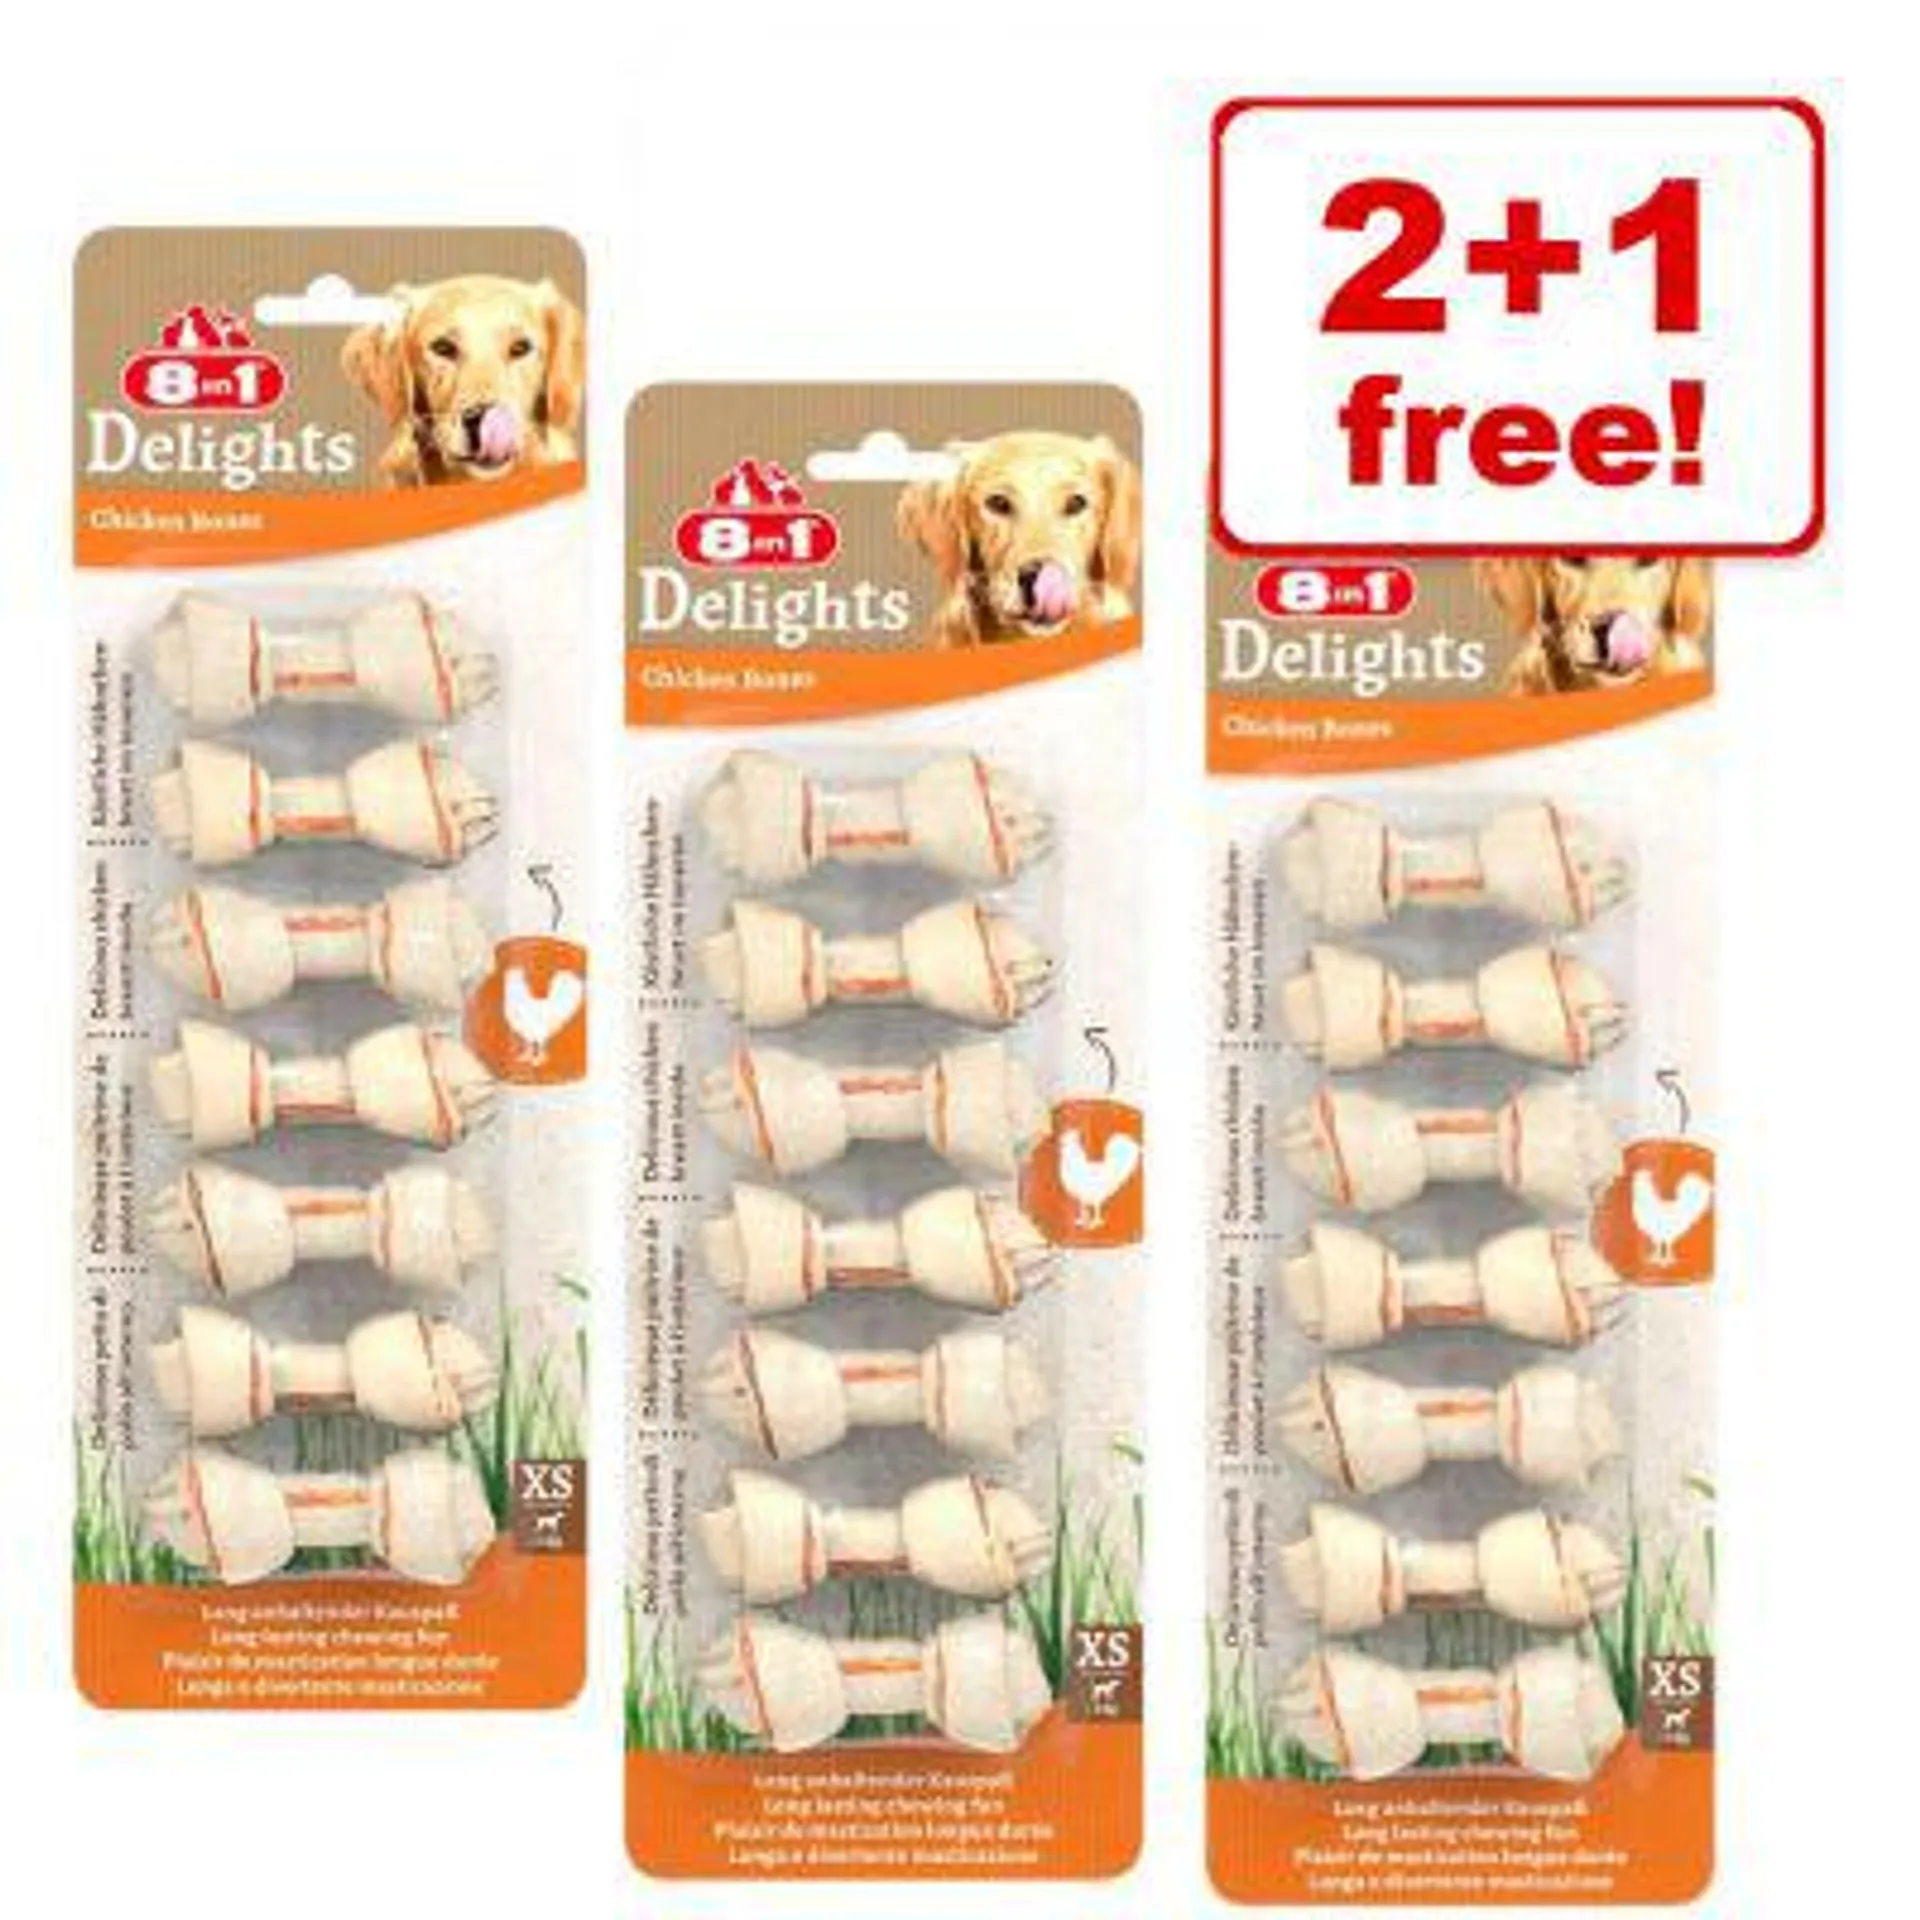 8in1 Delights Dog Snacks - 2 + 1 Free!*